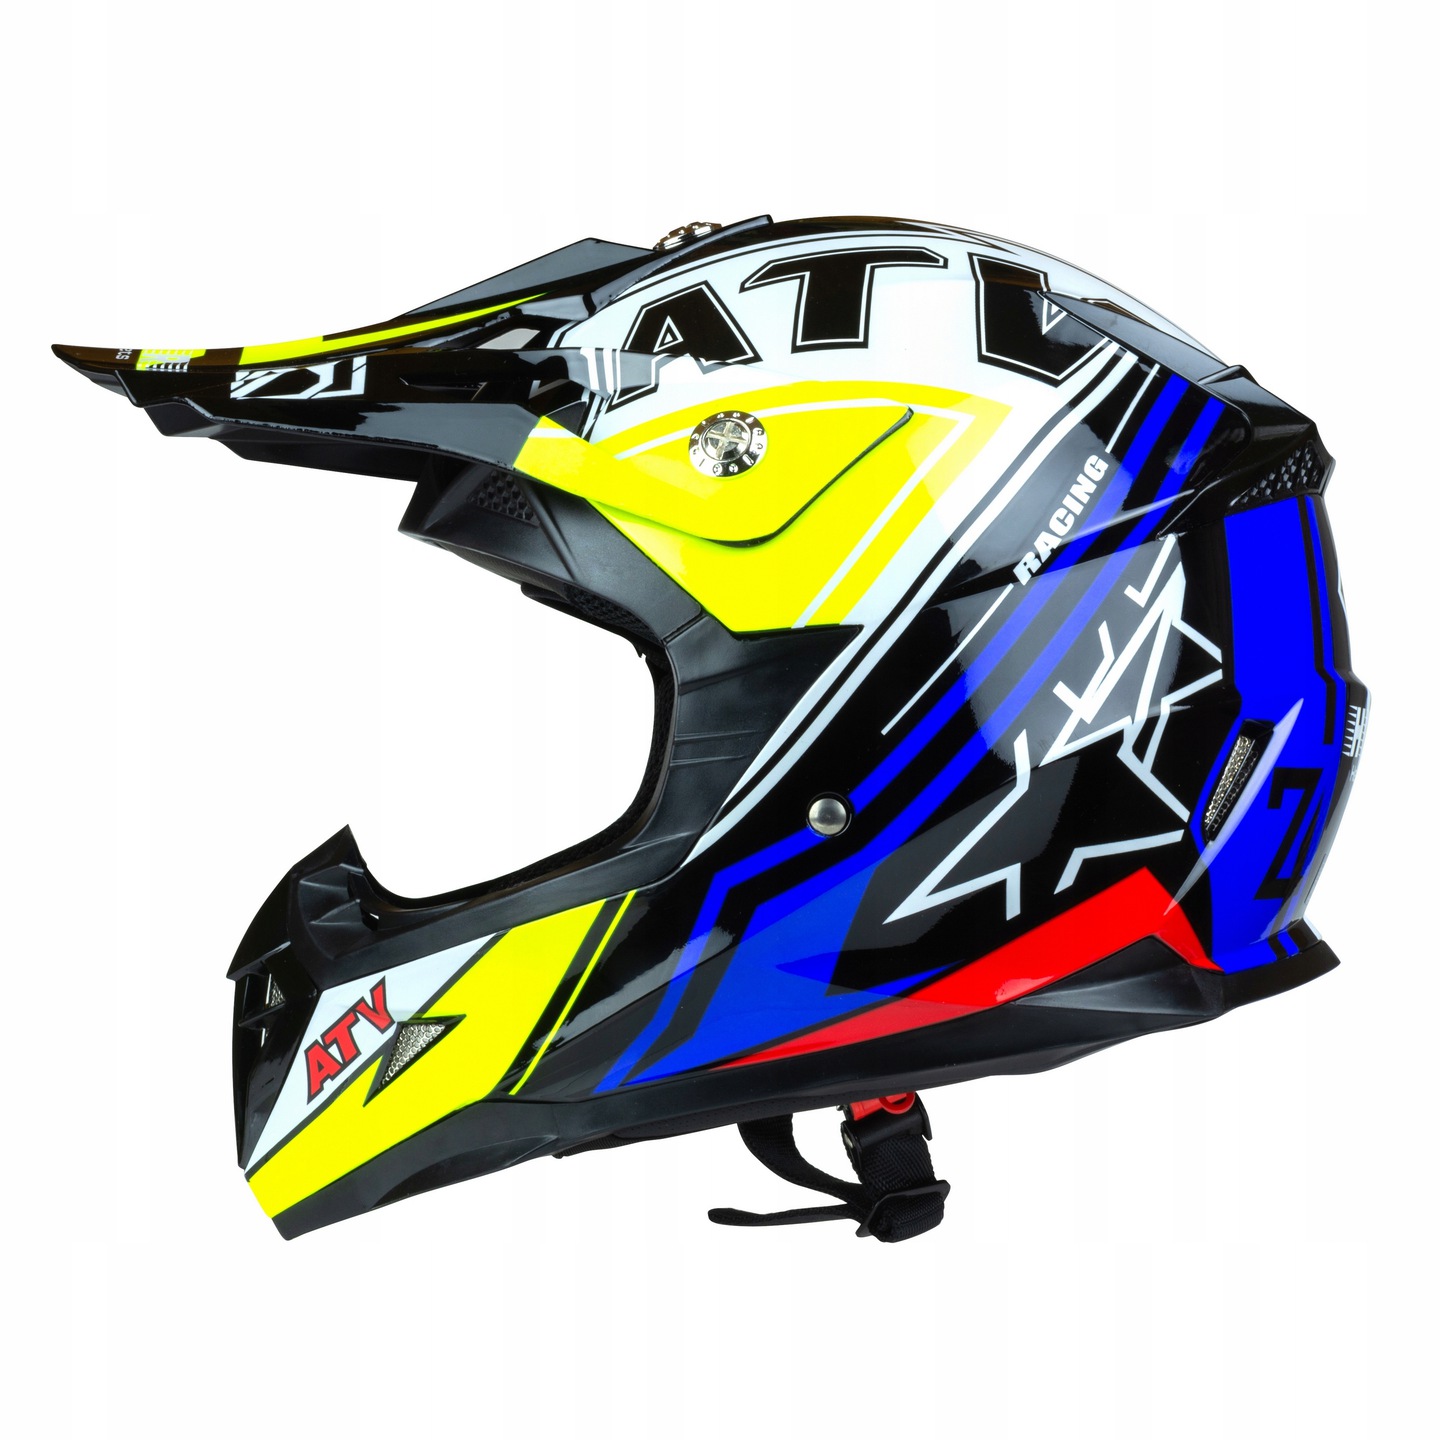 Moto přilba HORN ATV modrá-žlutá + brýle zdarma